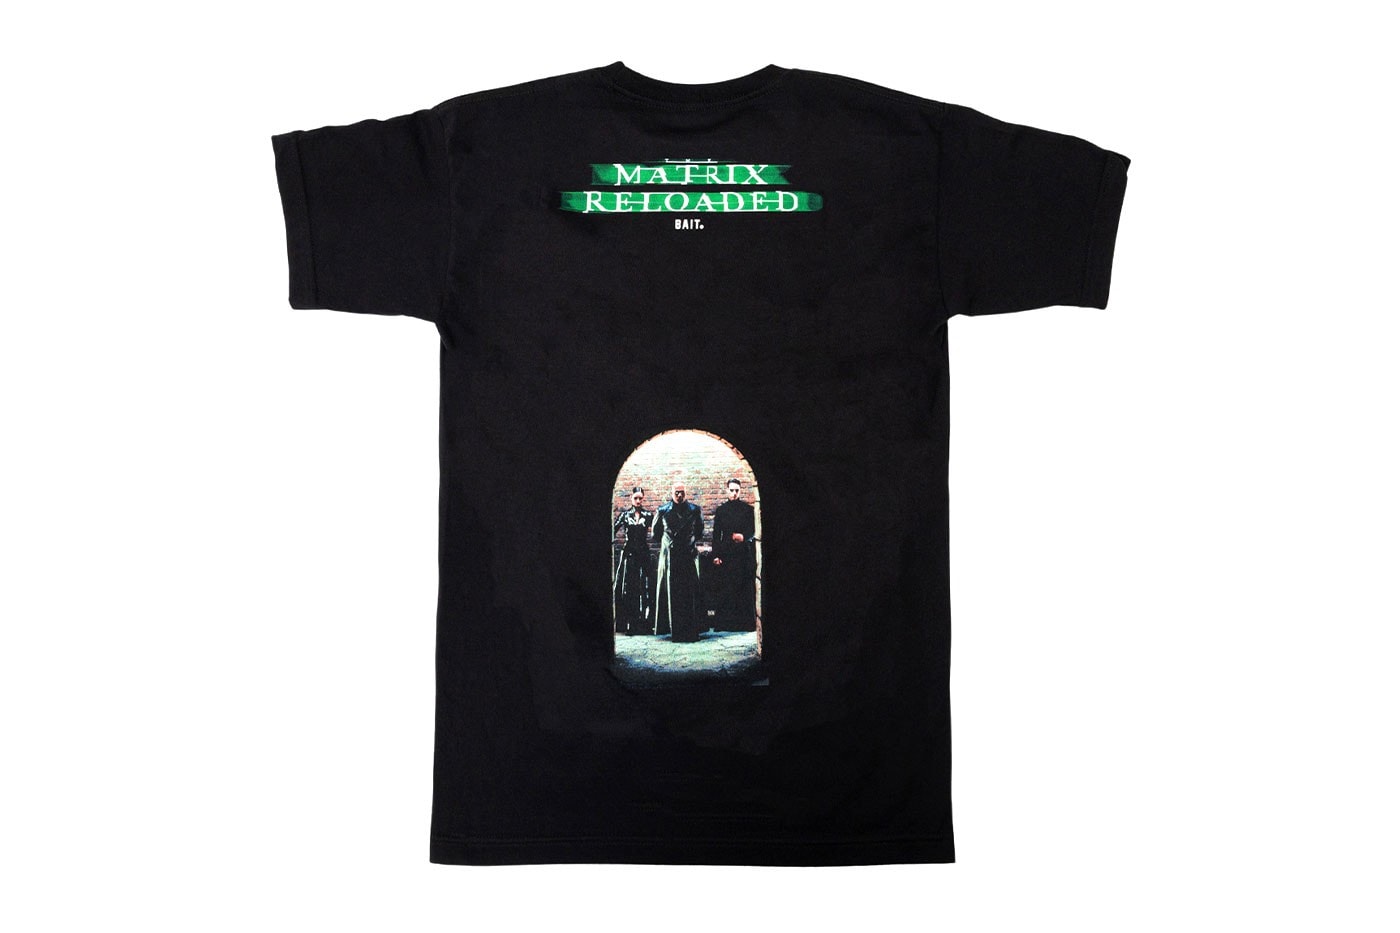 BAIT 攜手《駭客任務 The Matrix》打造最新 T-Shirt 別注系列